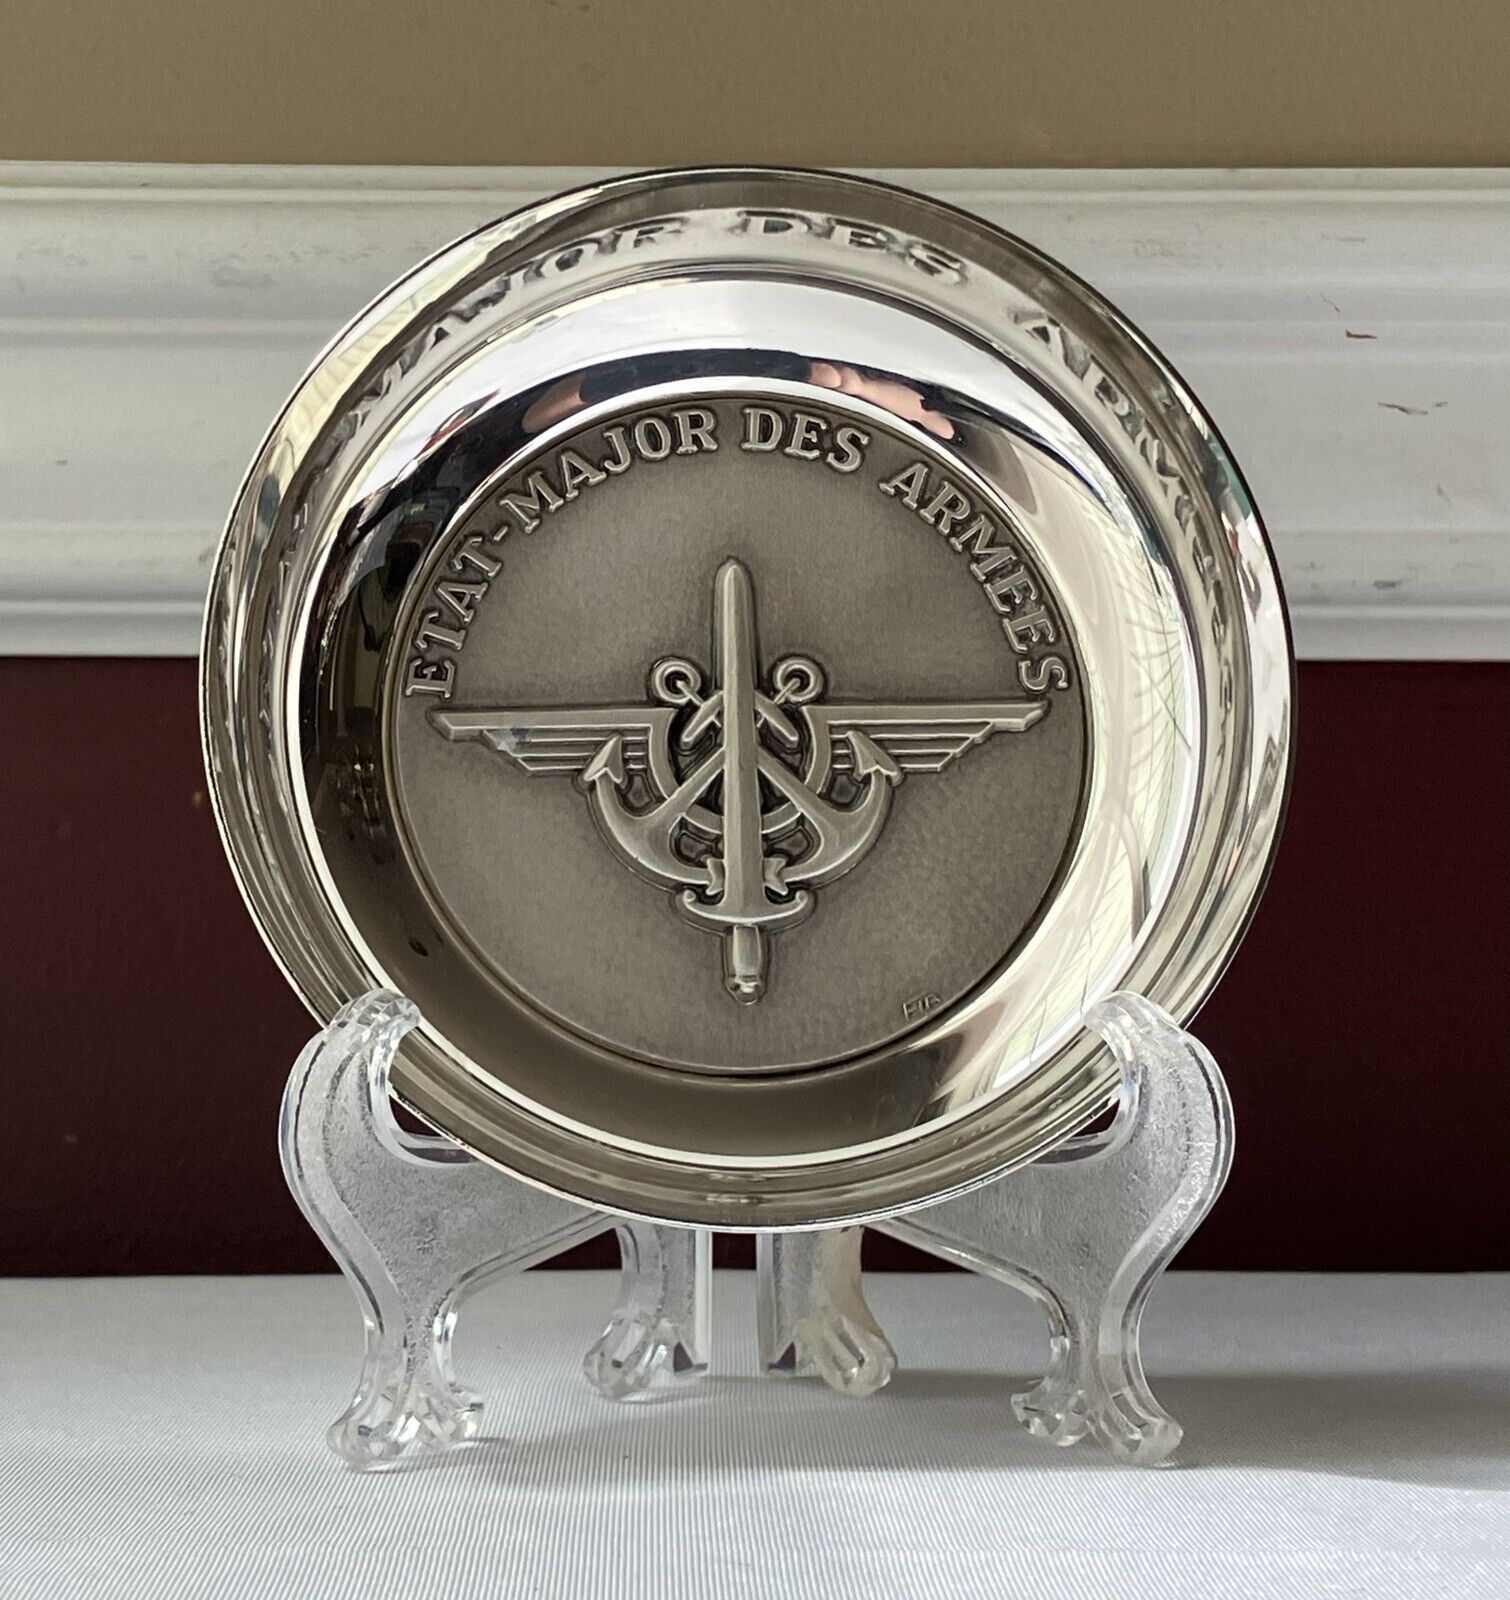 VTG French Silver Plate Etat-Major Des Armees Bowl Gift To US General Vuono